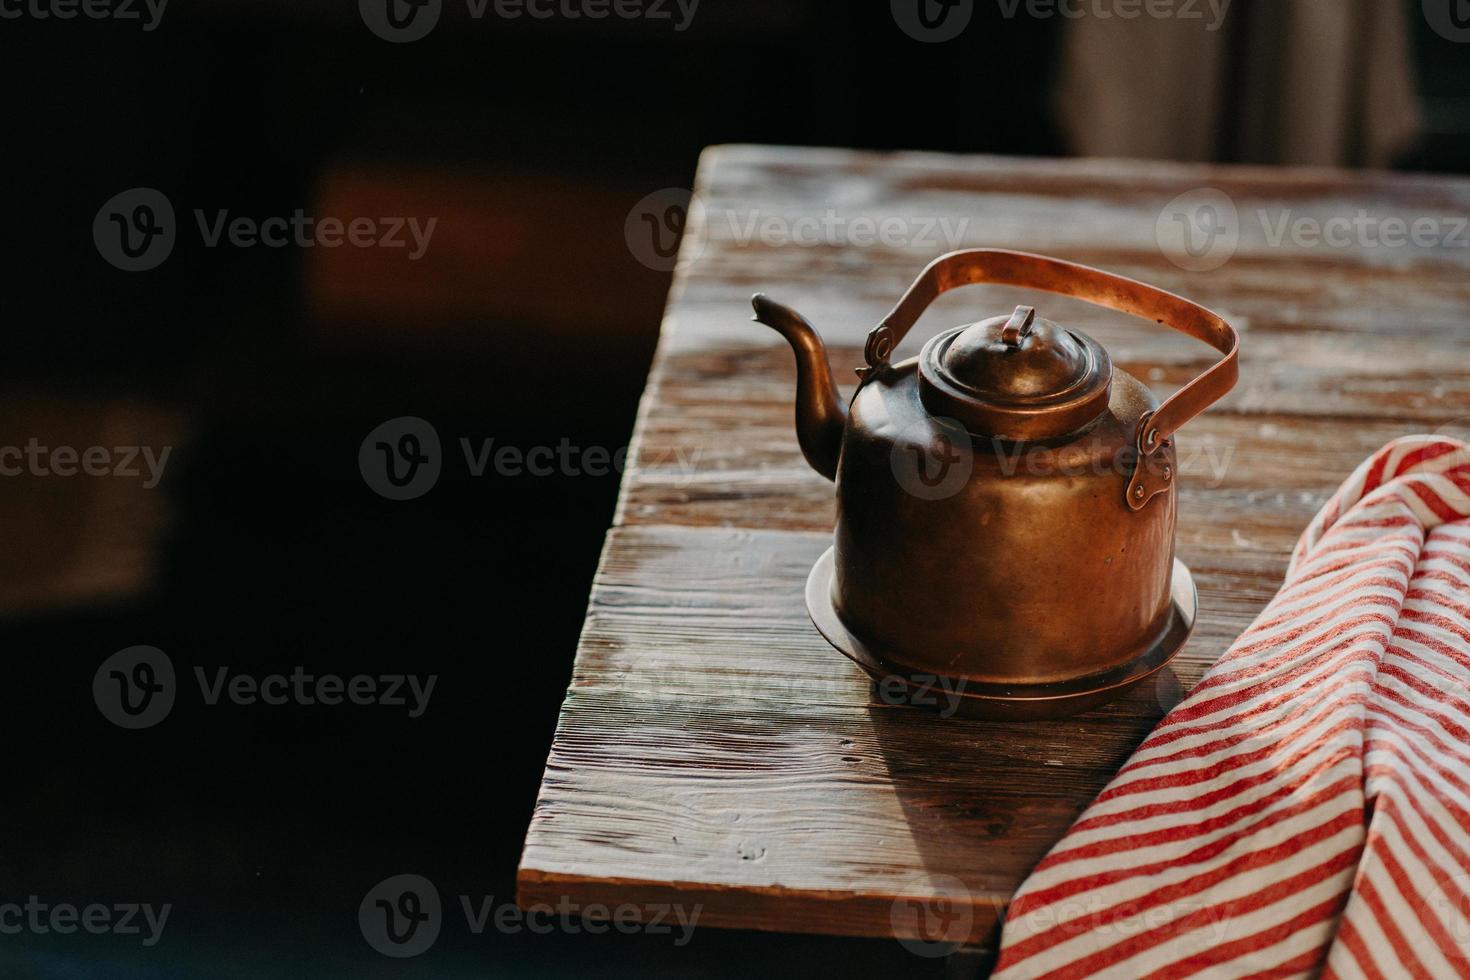 antigua tetera de metal de cobre sobre una mesa de madera en una habitación oscura. toalla de rayas rojas cerca. Tetera antigua para hacer té o café. equipo de cocina foto